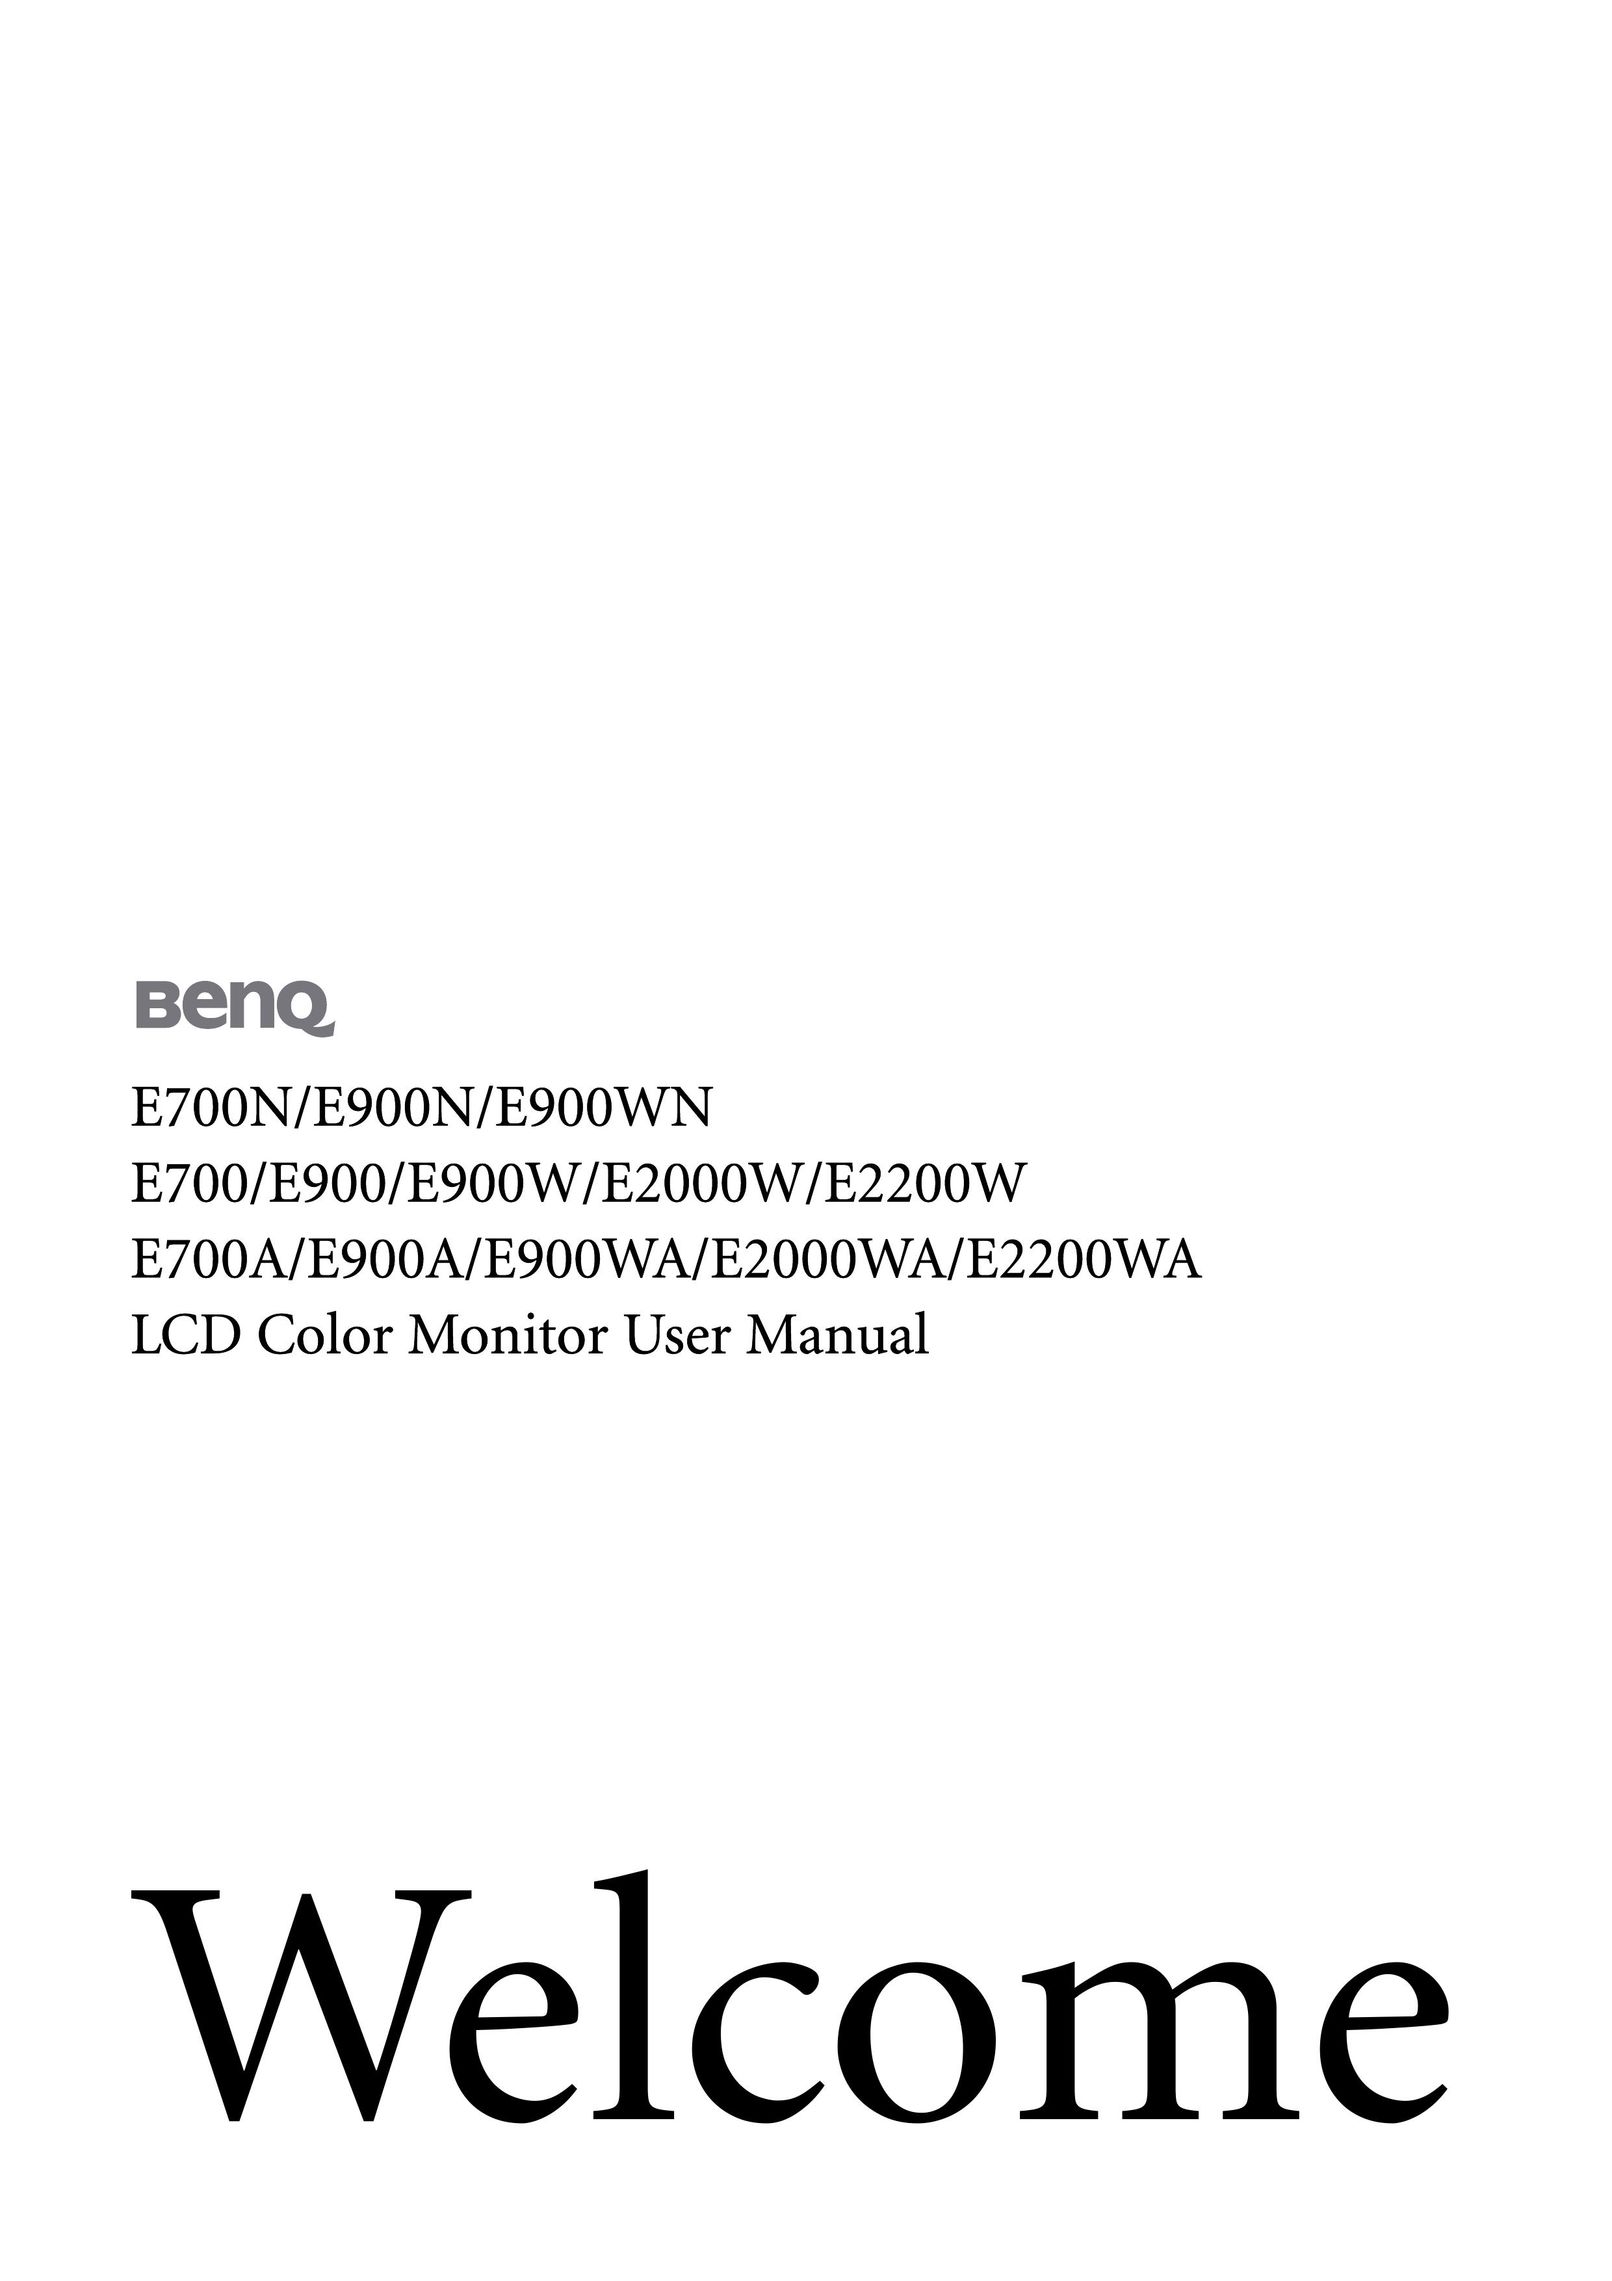 BenQ E2200W Computer Monitor User Manual